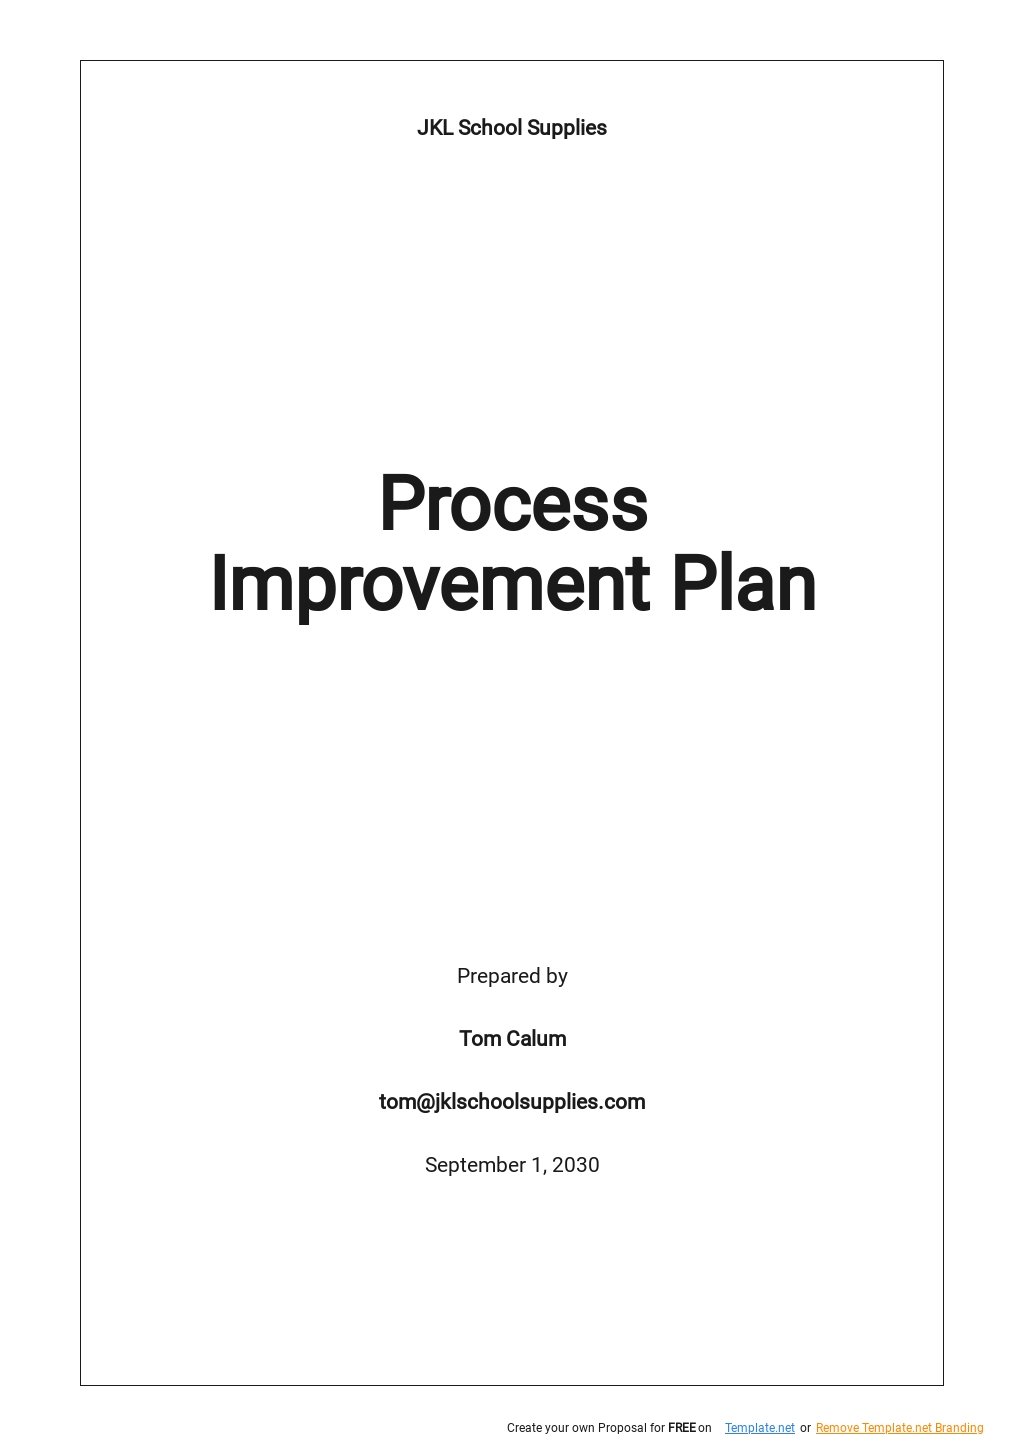 FREE Process Improvement Plan Template in Microsoft Word (DOC